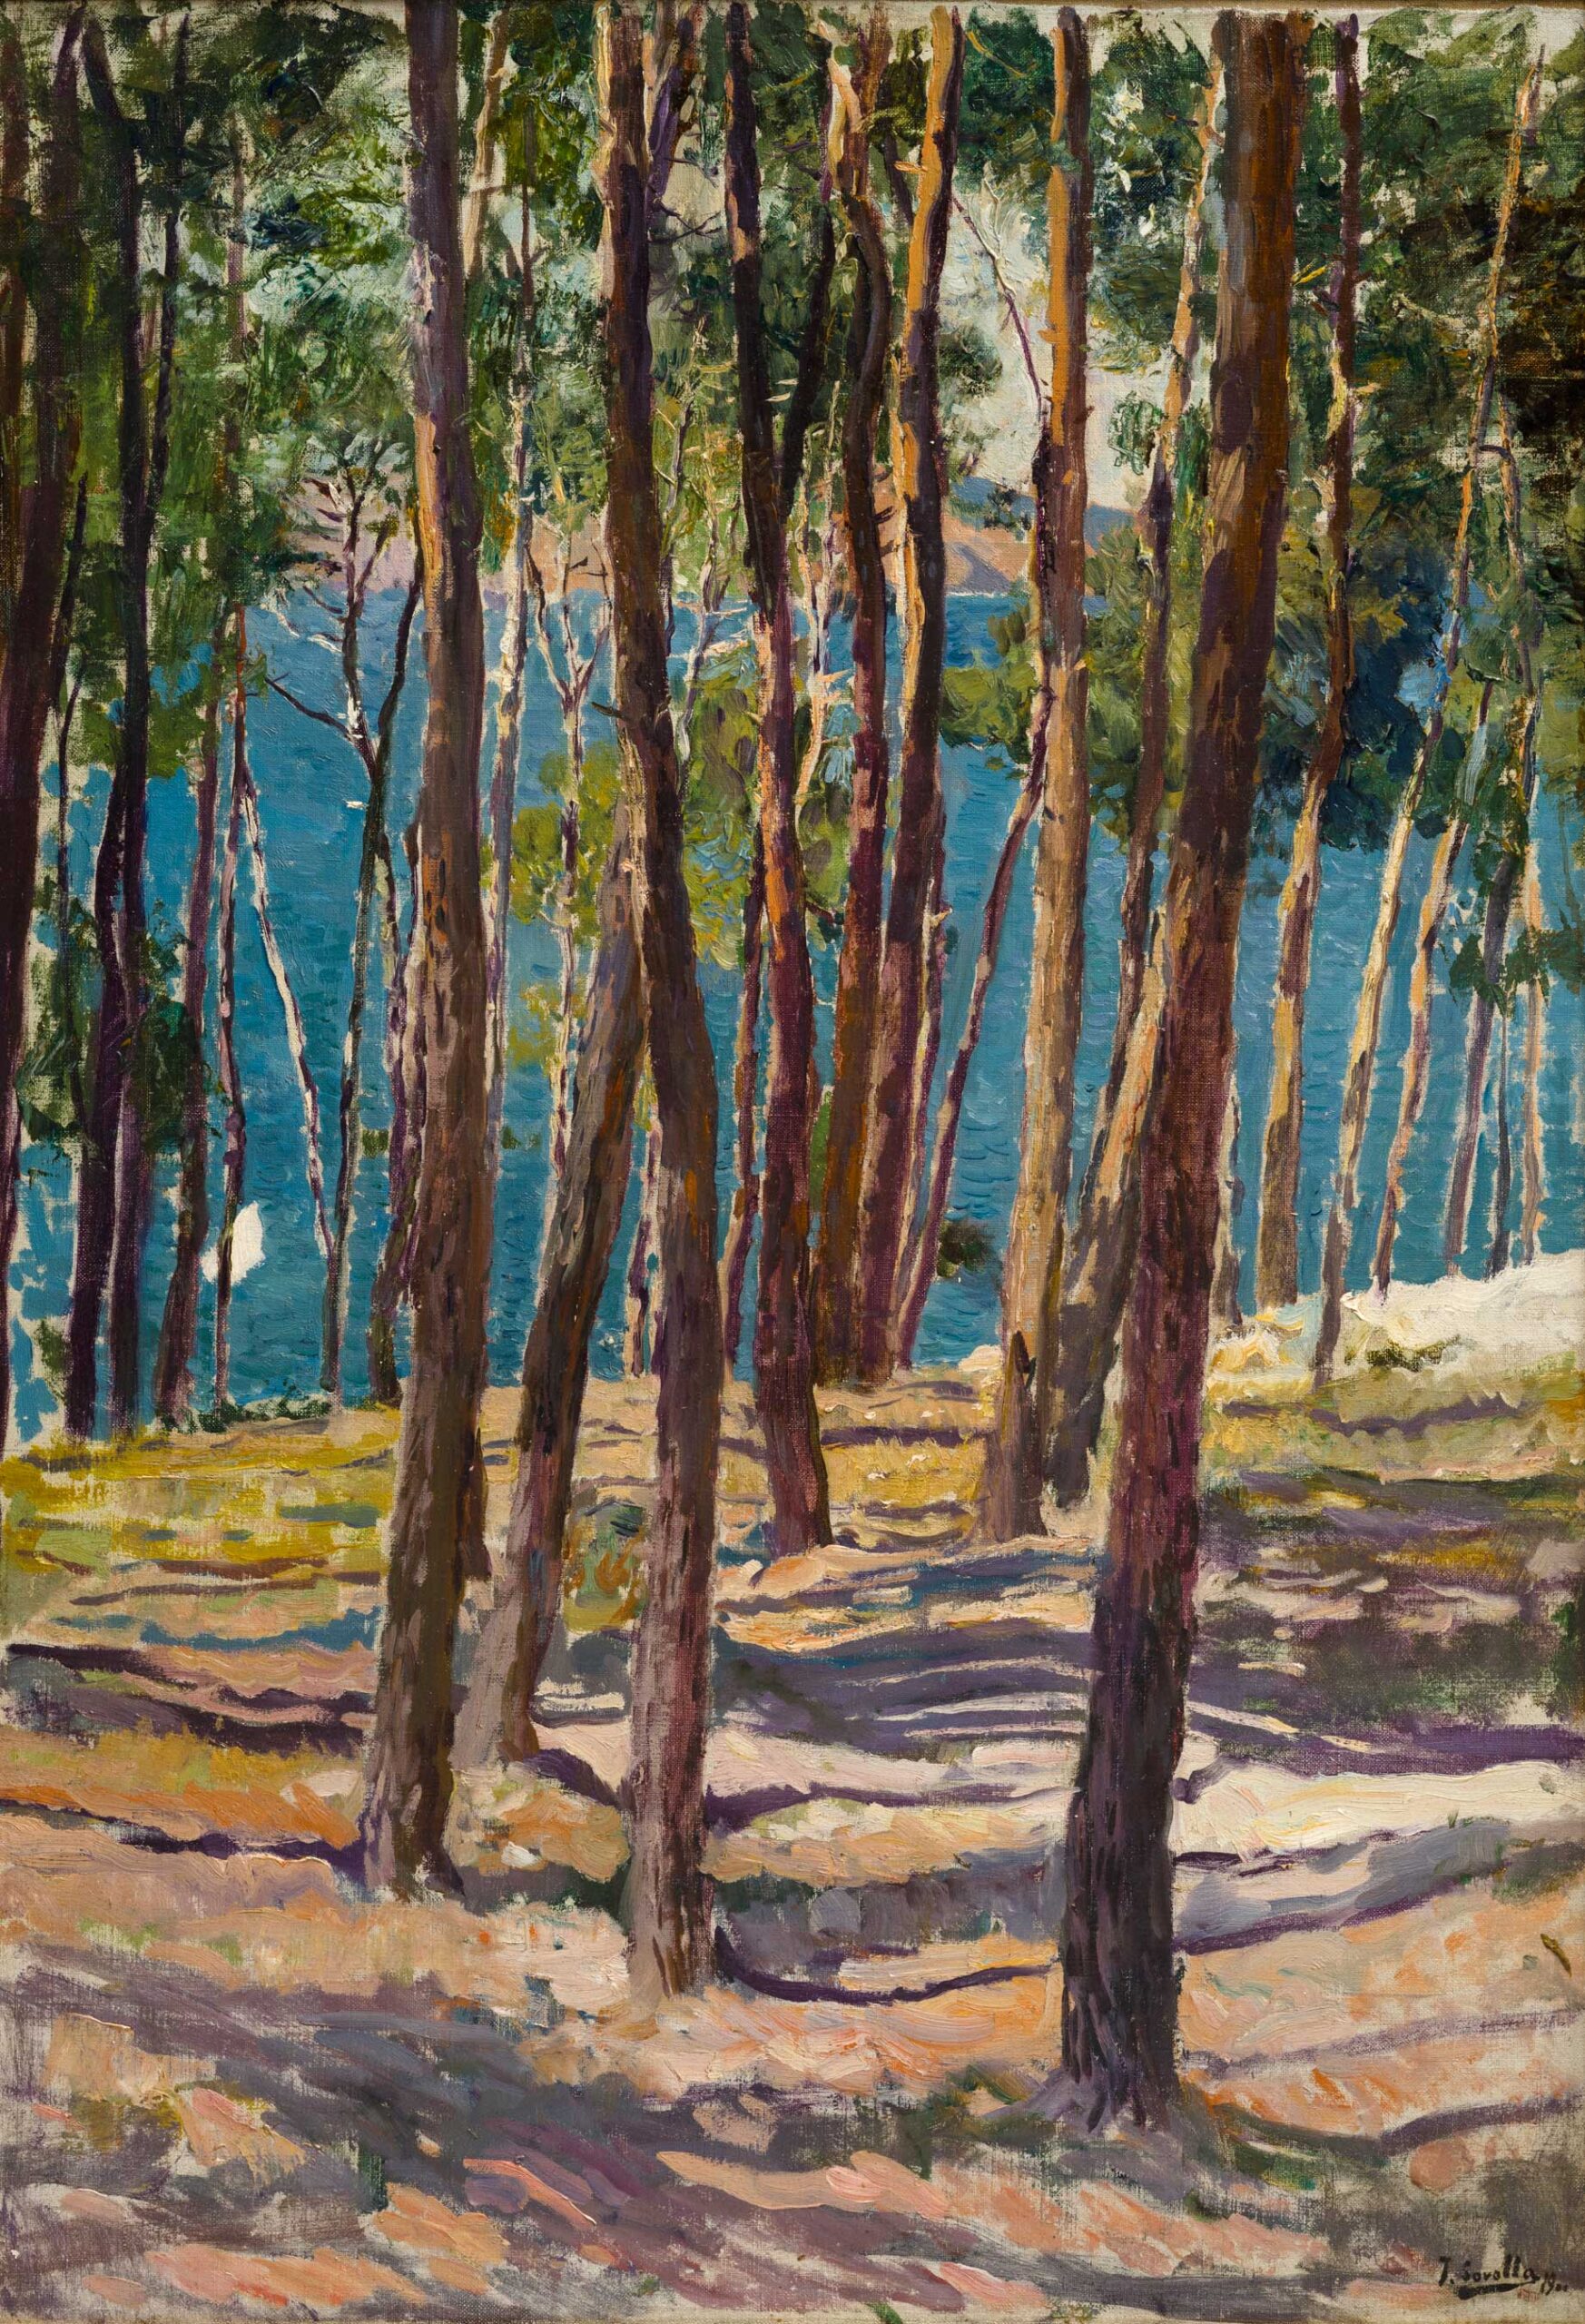 Joaquín Sorolla y Bastida, “Pines of Galicia (Pinos de Galicia),” 1900. Oil on canvas, 34 5/8 x 23 5/8 in. (88 x 60 cm). Collection of Debbie Turner. Photo: Phillipp Rittermann.